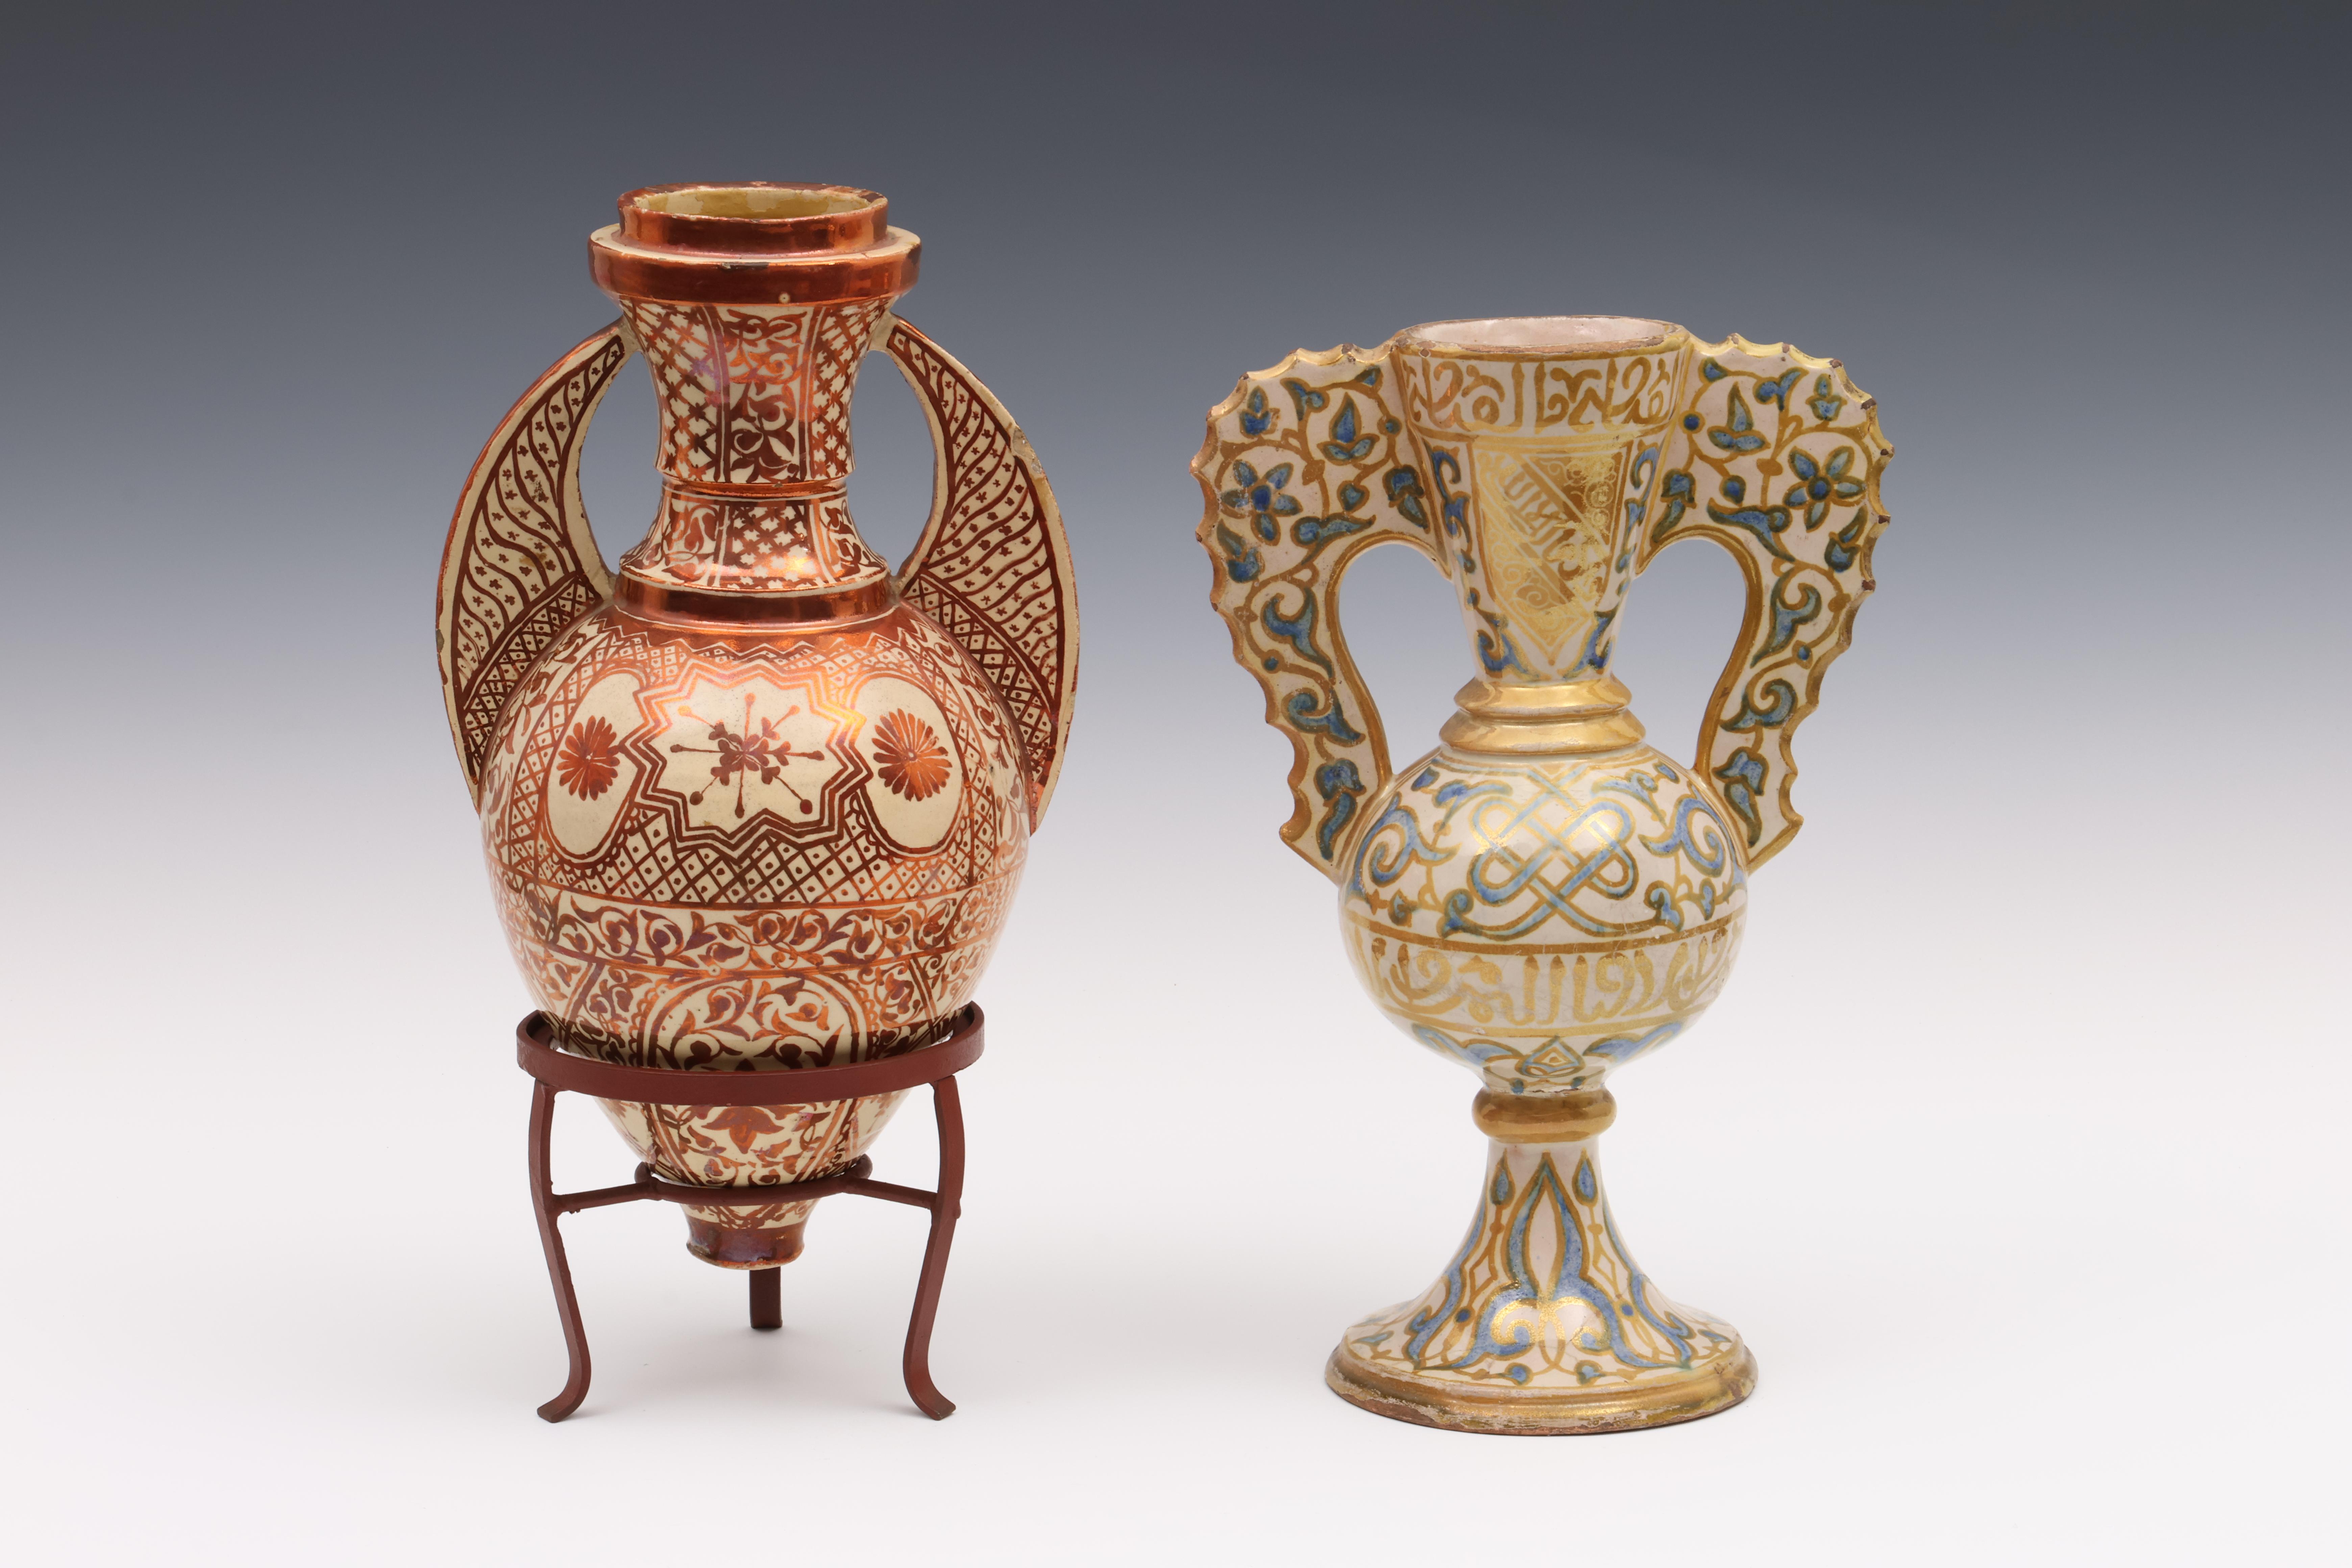 Two Hispano-Moresque lustre-glazed 'Alhambra' vases, Spain, 19th-20th century - Image 2 of 2